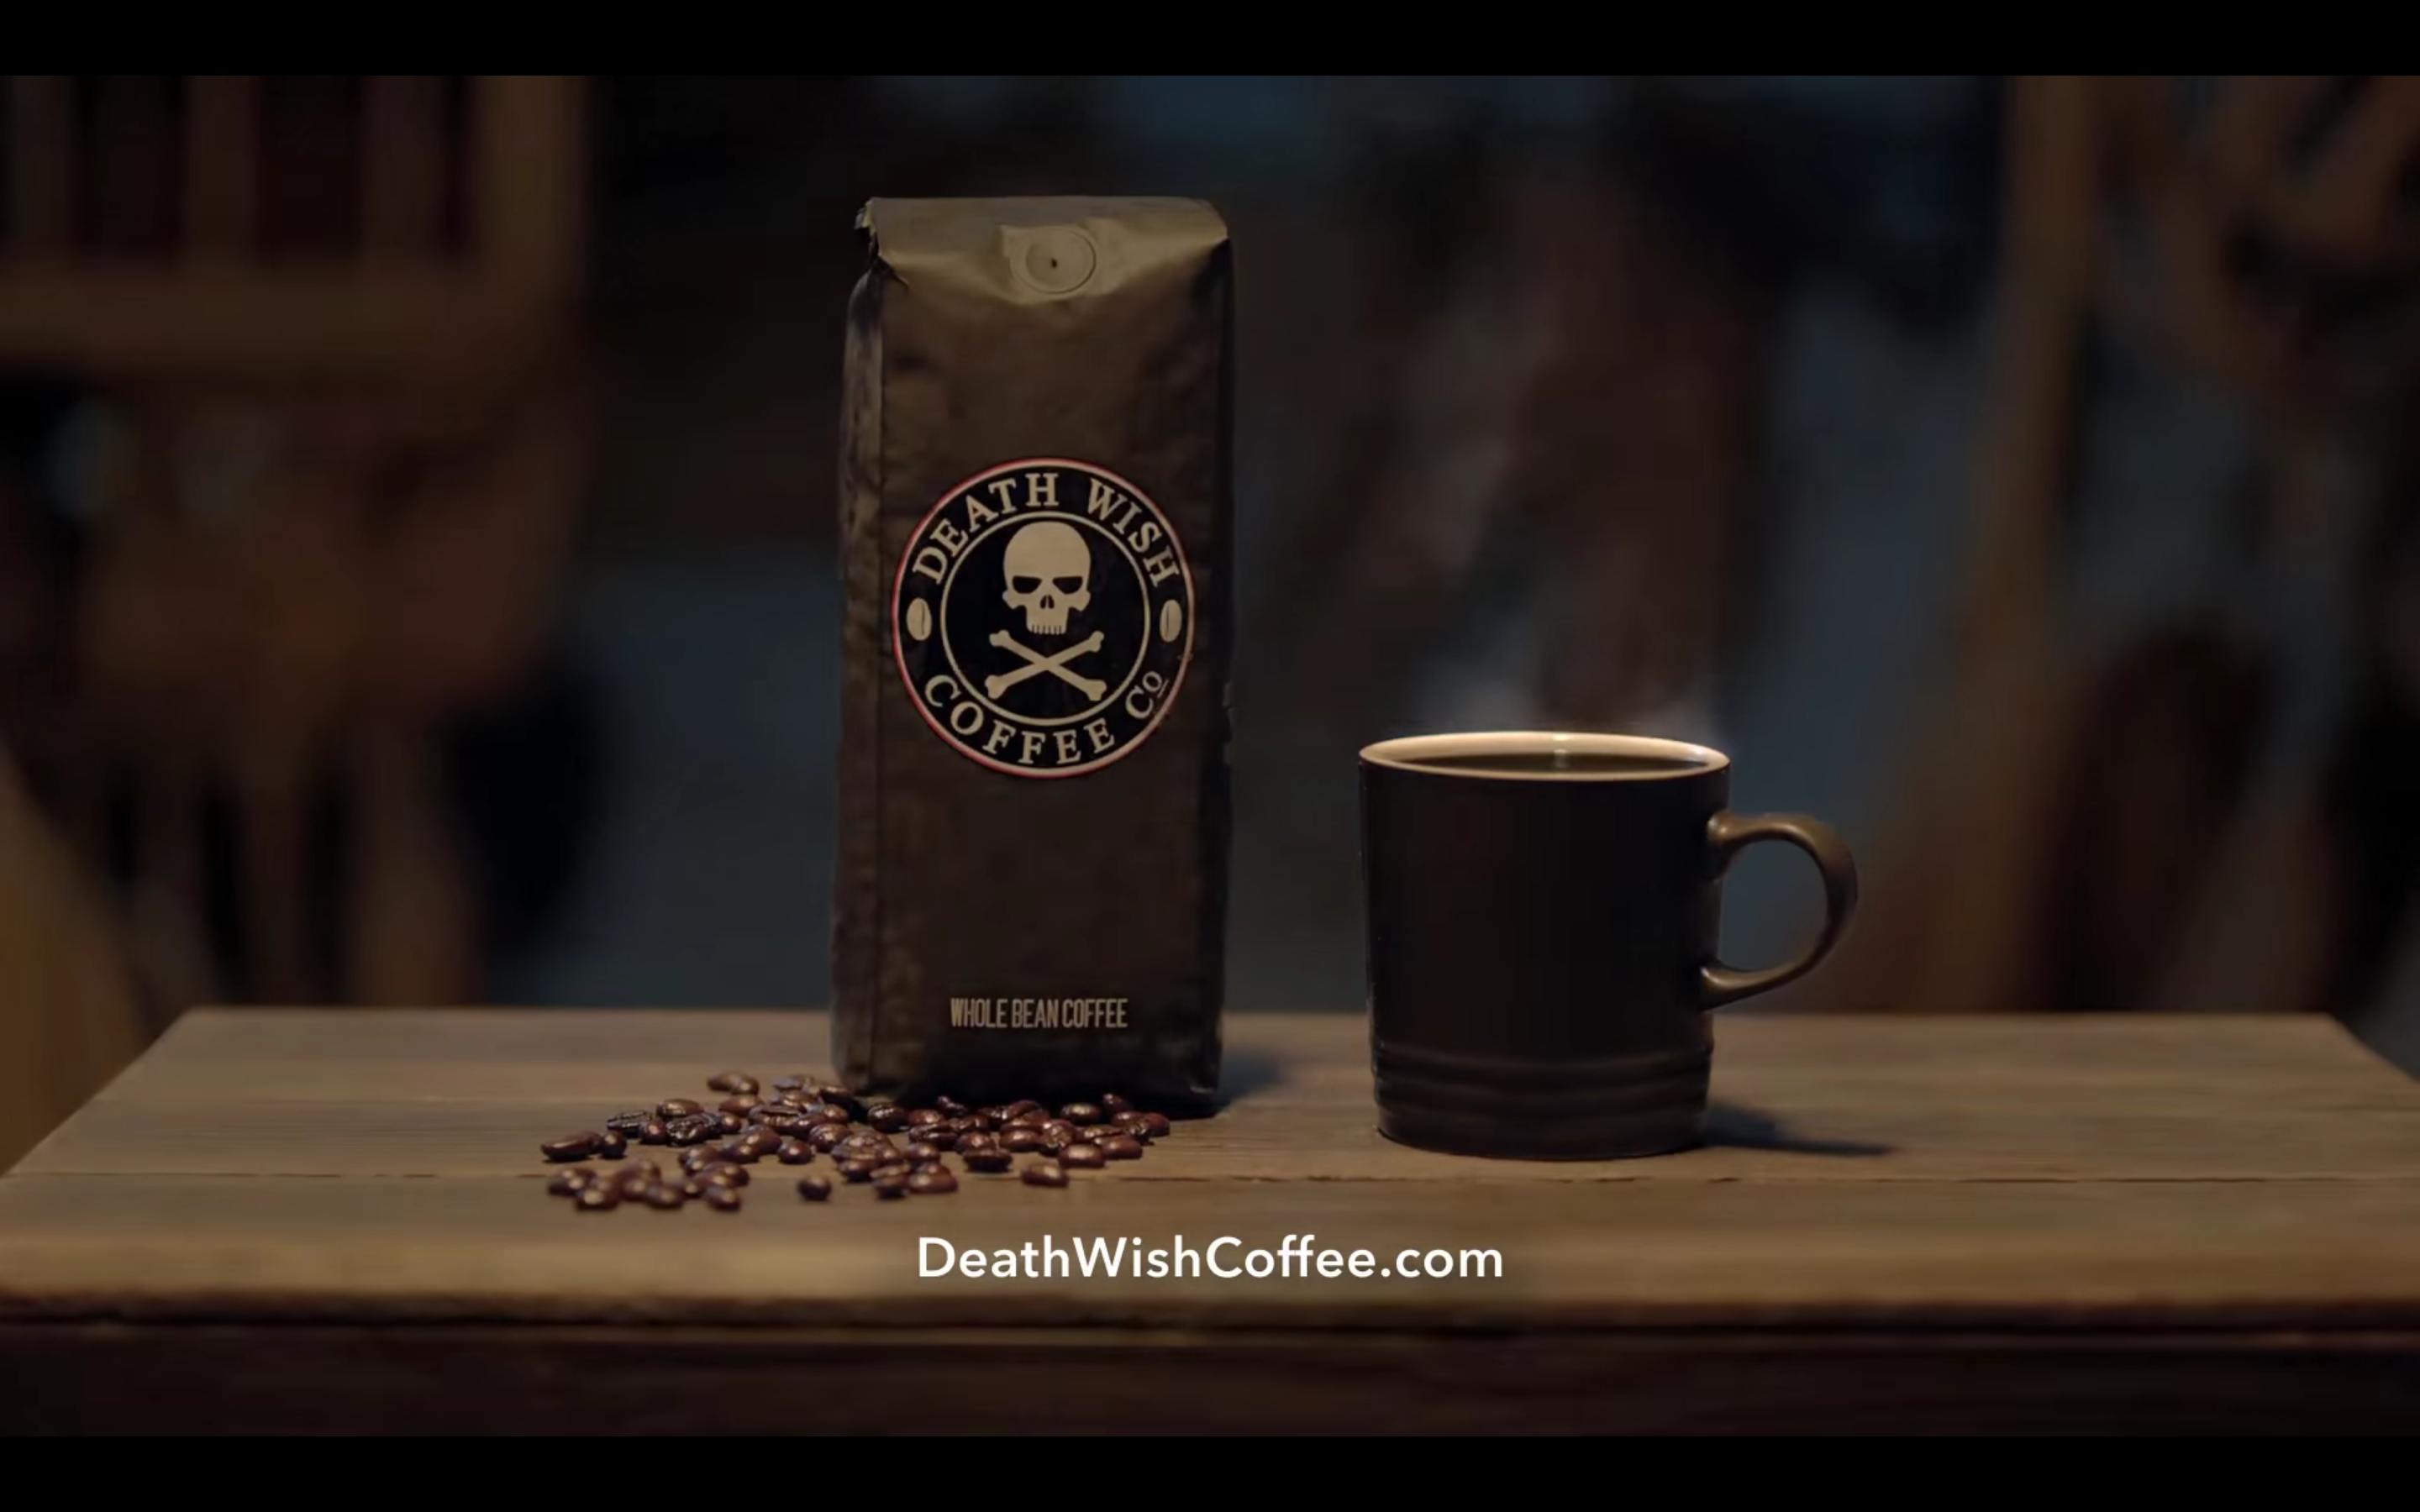 Death Wish Coffee Company Wins Super Bowl Ad - Famous Foodies2880 x 1800